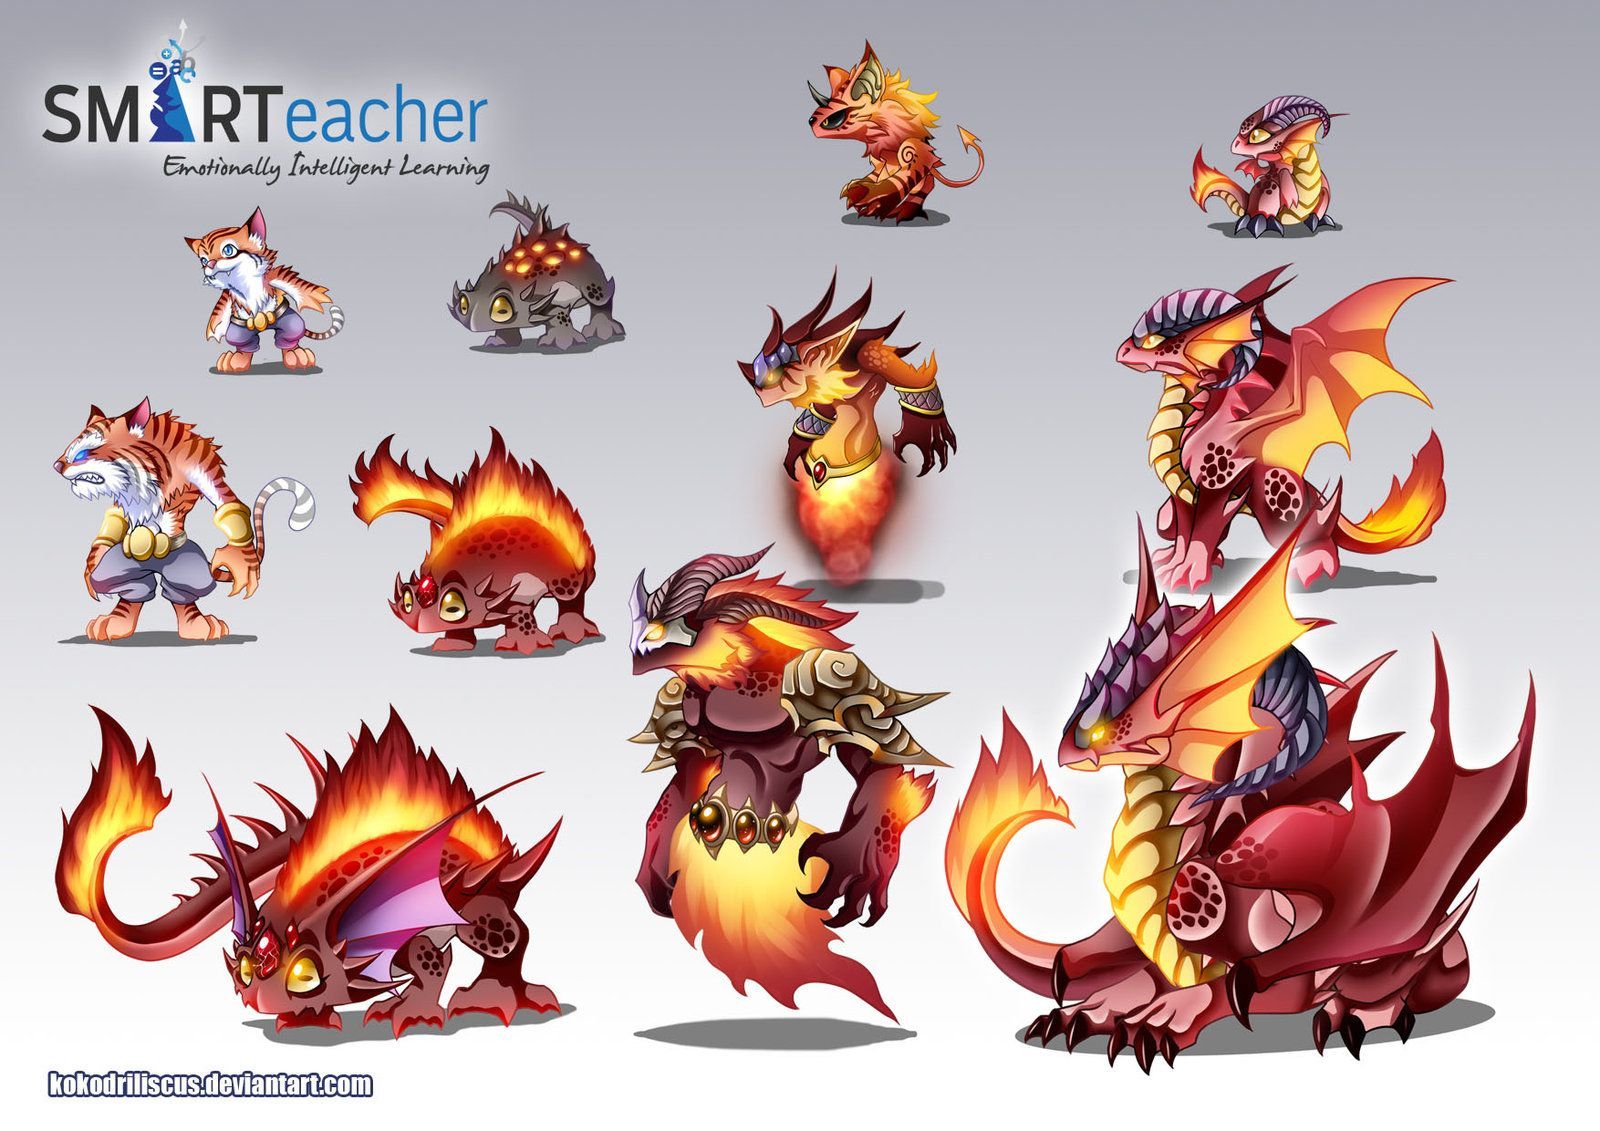 kokodriliscus's gallery. Dragon sketch, Character design, Fantasy monster